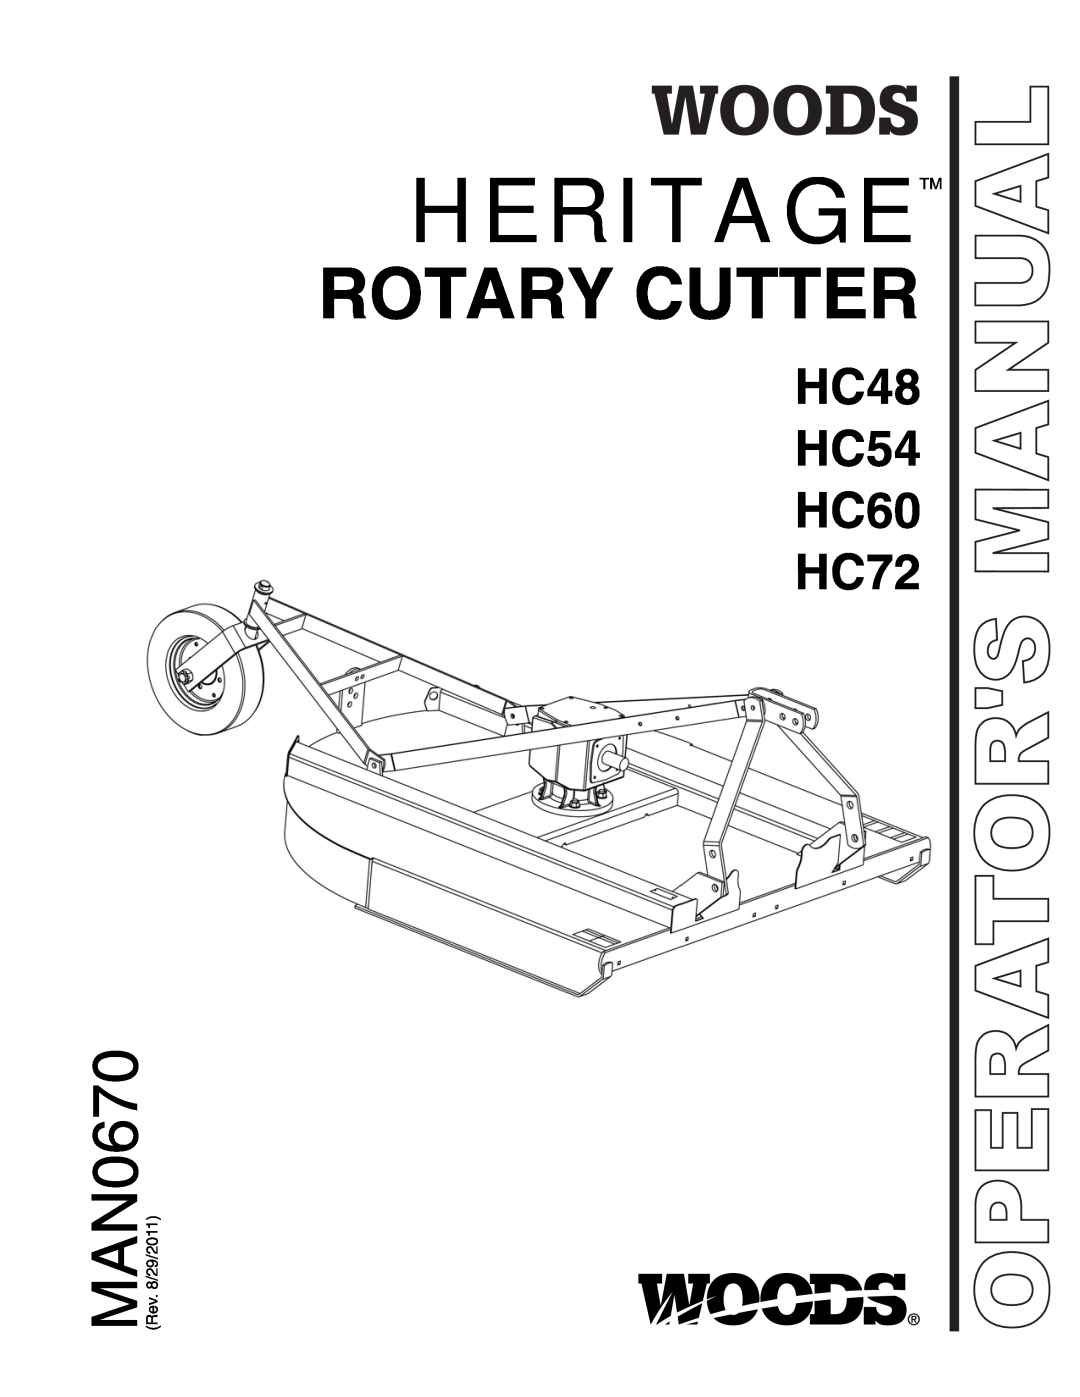 Woods Equipment manual Heritagetm, Rotary Cutter, HC48 HC54 HC60 HC72, Operators Manual 